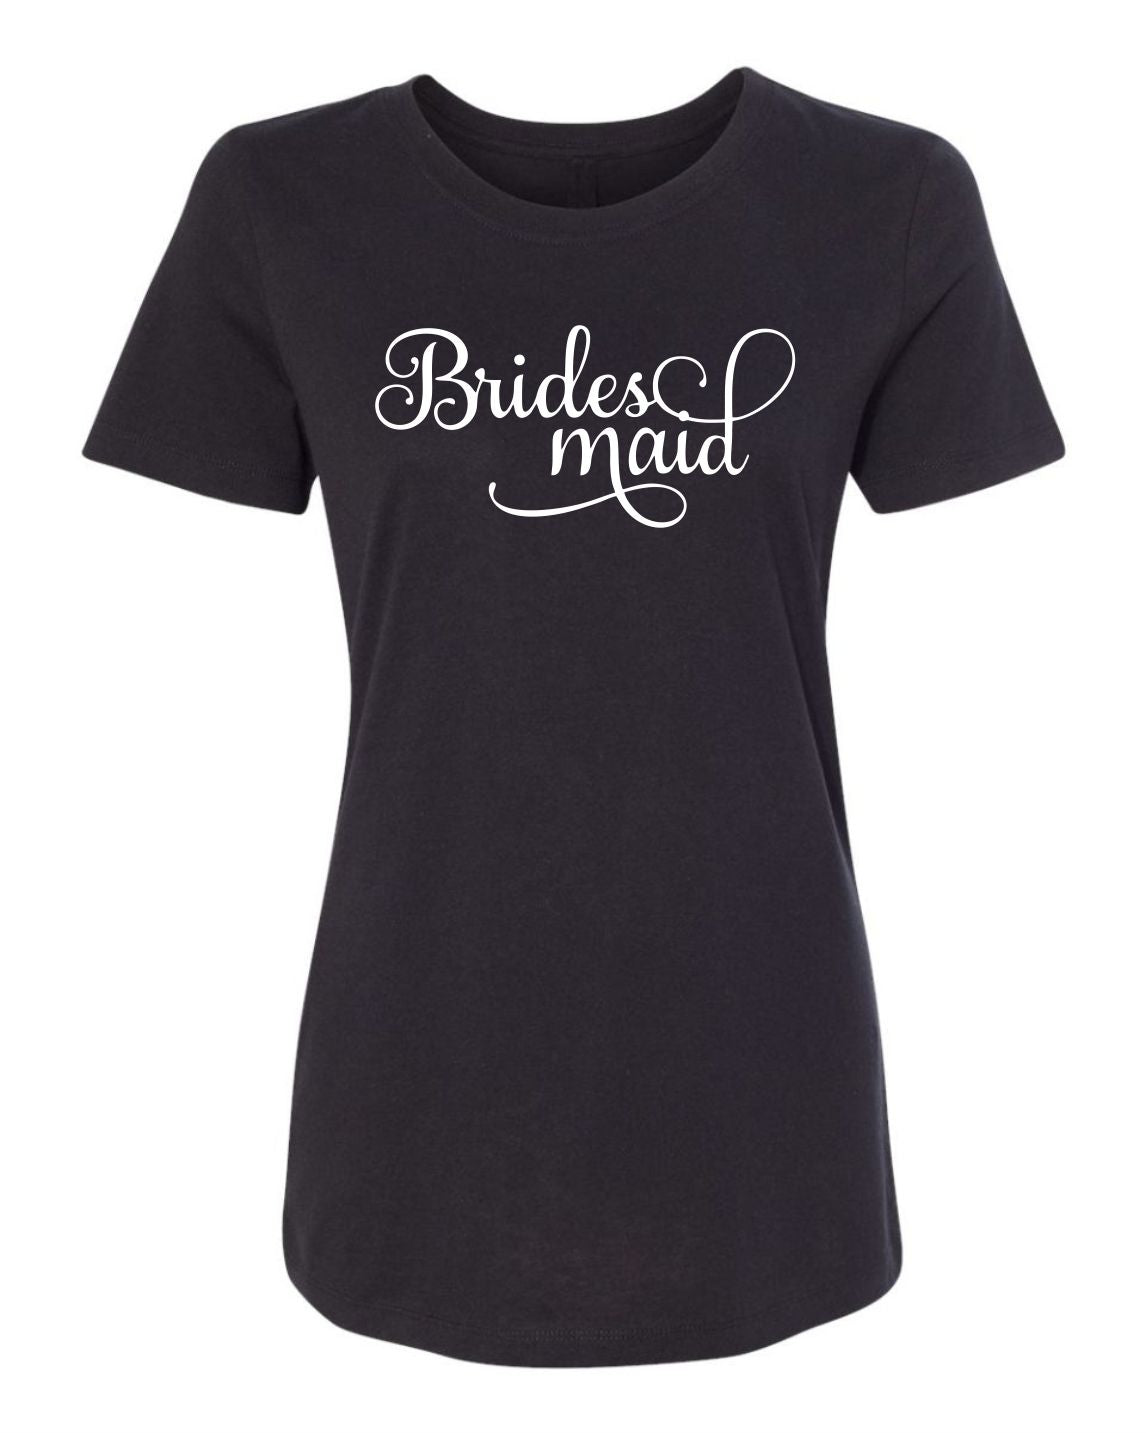 "Bridesmaid" (Swirl Design) T-Shirt